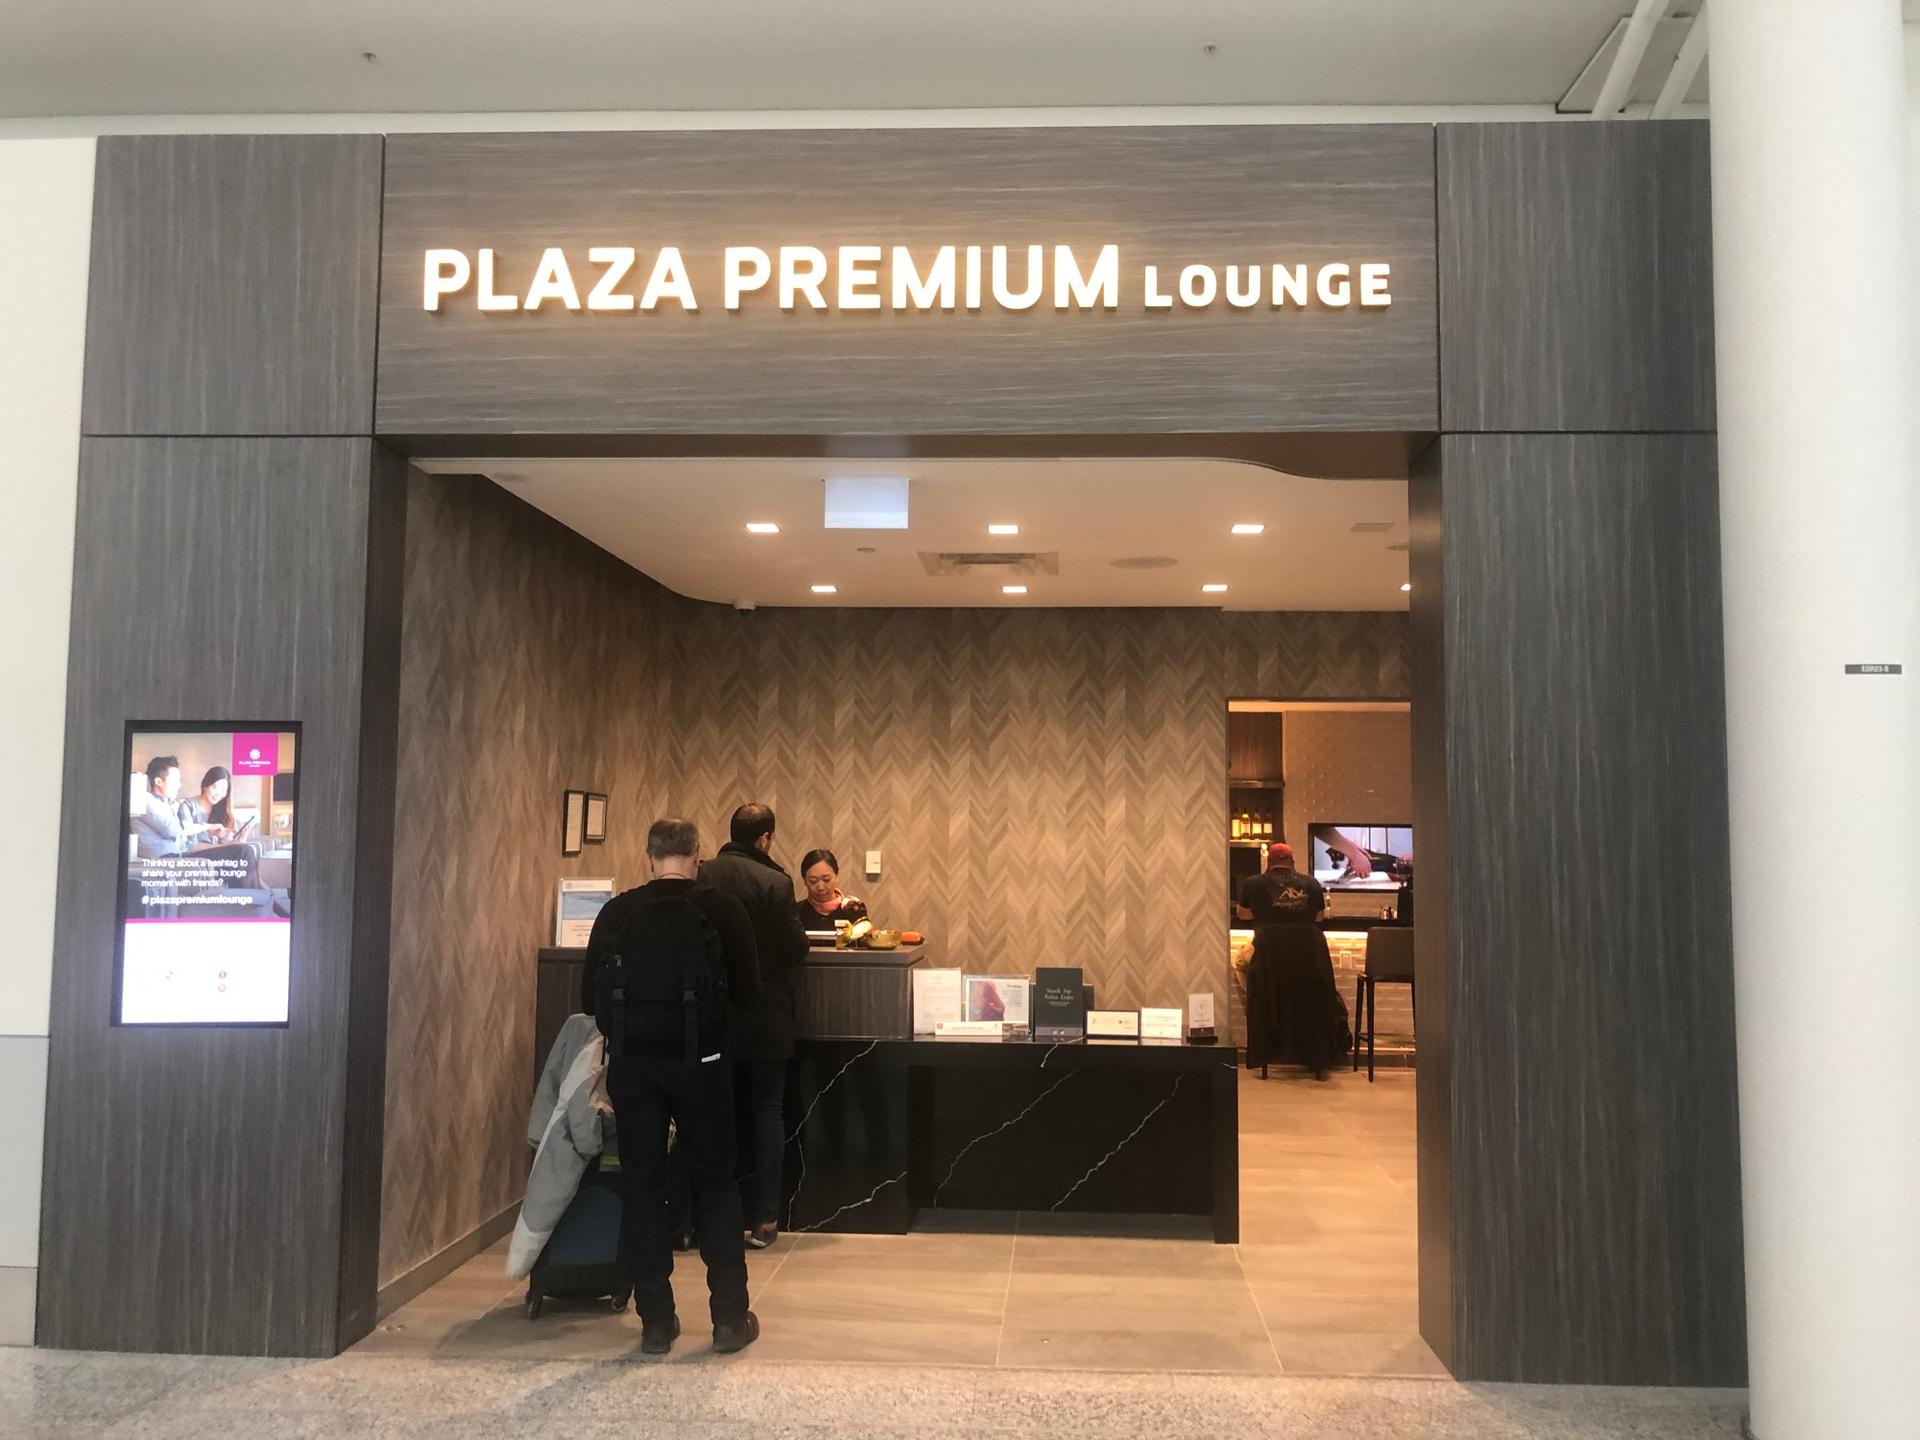 Plaza Premium Lounge image 6 of 31